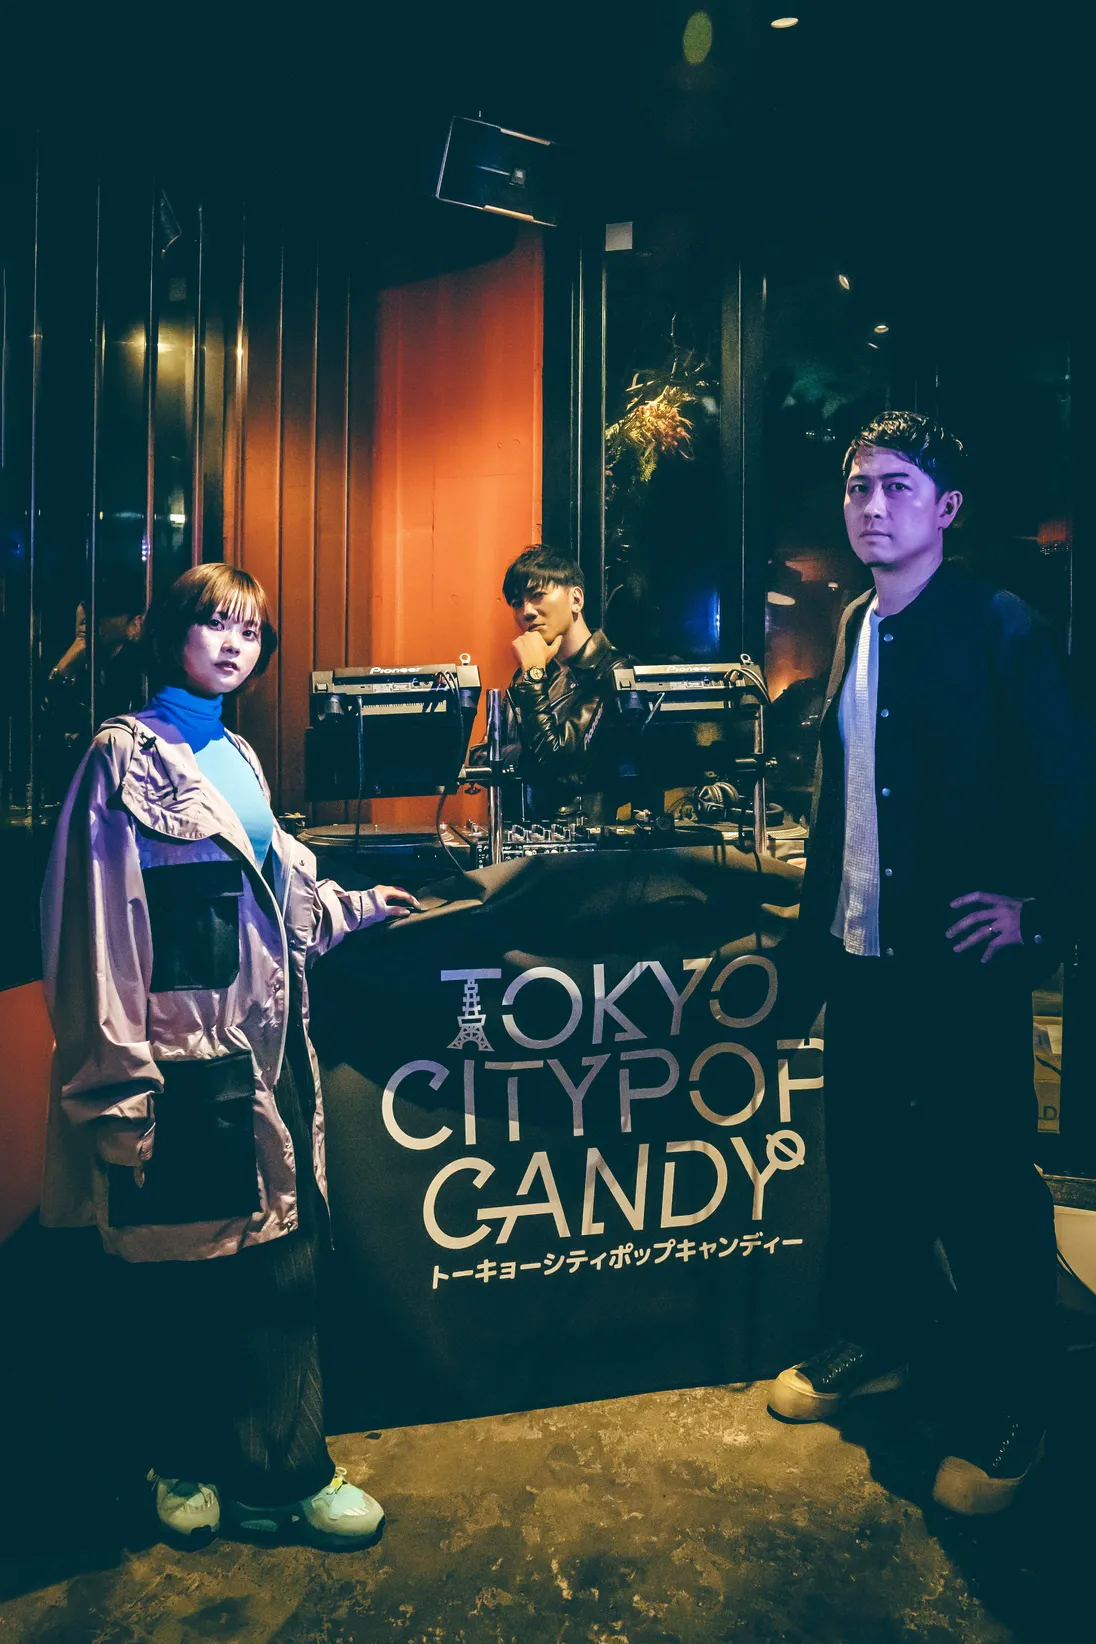 TOKYO CITYPOP CANDY、メインボーカルの夕七（写真左）、ミュージックプロデューサーのTeddyLoid（写真中央)とCarlos K.(写真右)